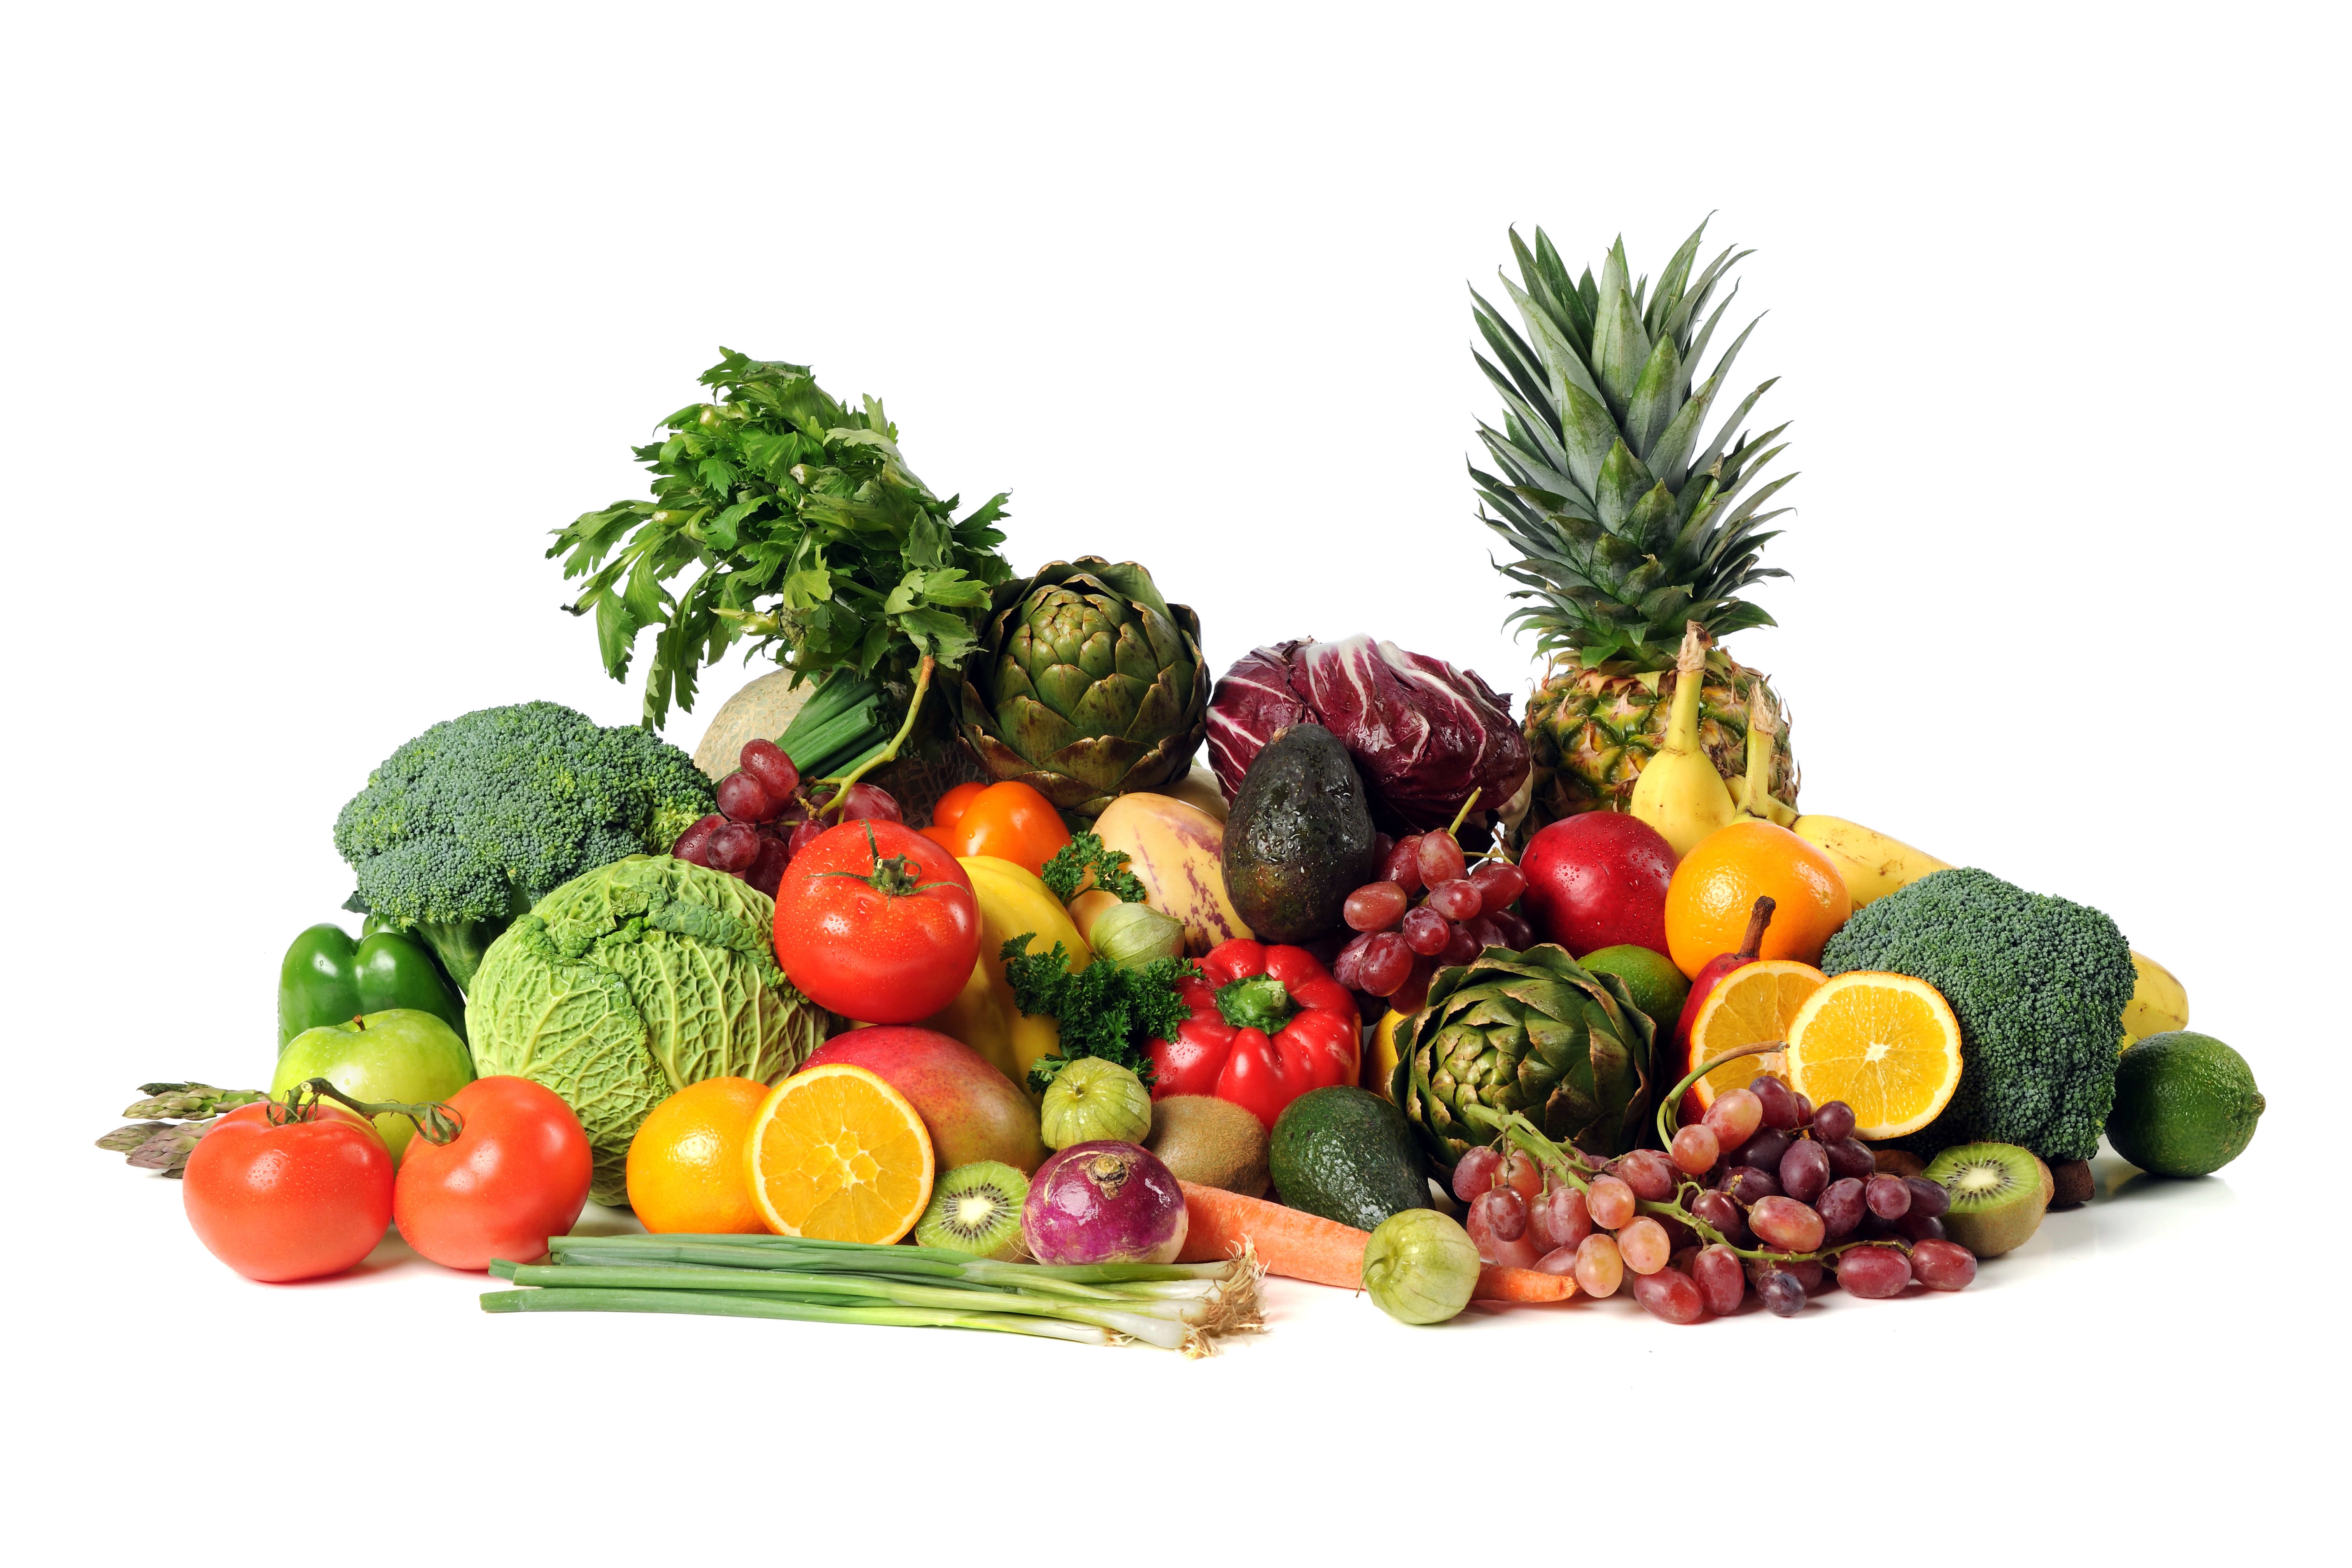 -Vegetables wear sweets vegetarian dishes new food method